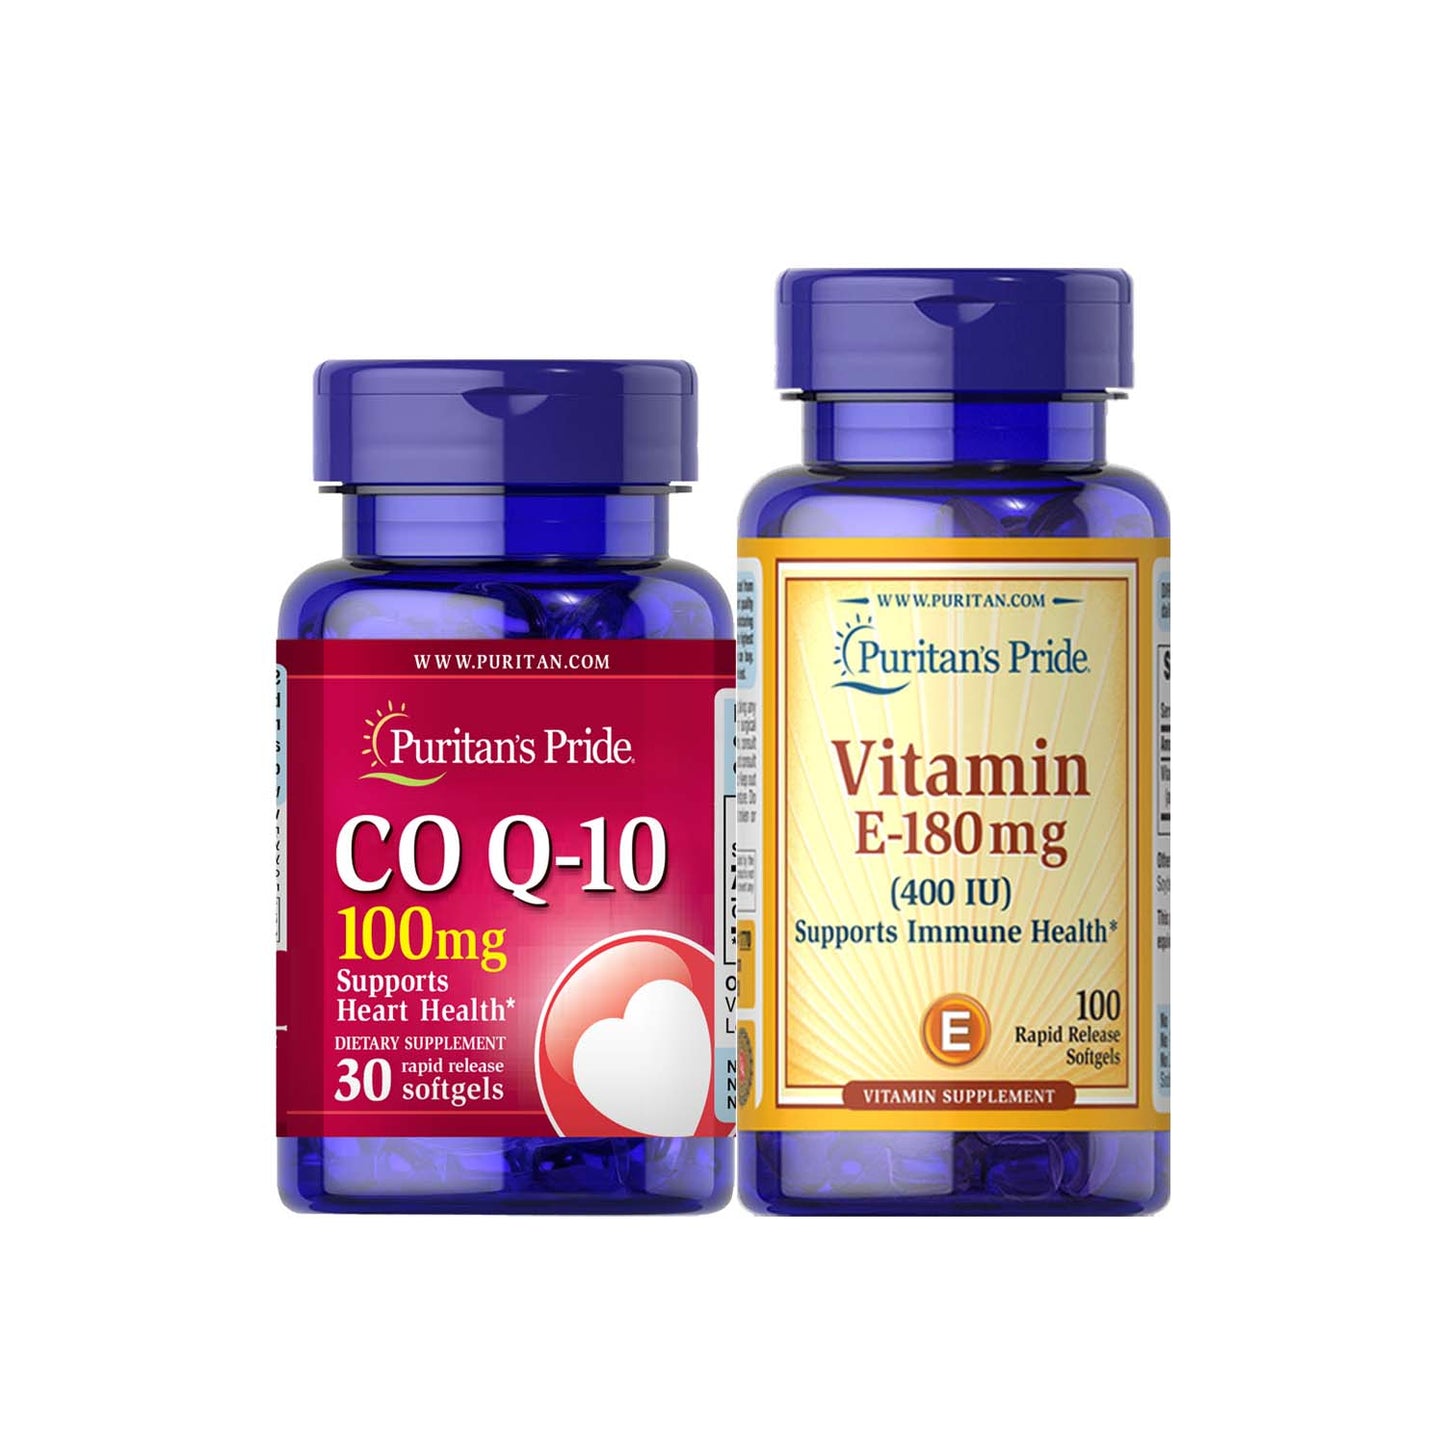 Co Q-10 100 mg 30 softgels + Vitamin E Synthetic 400iu Puritan's Pride PCOS